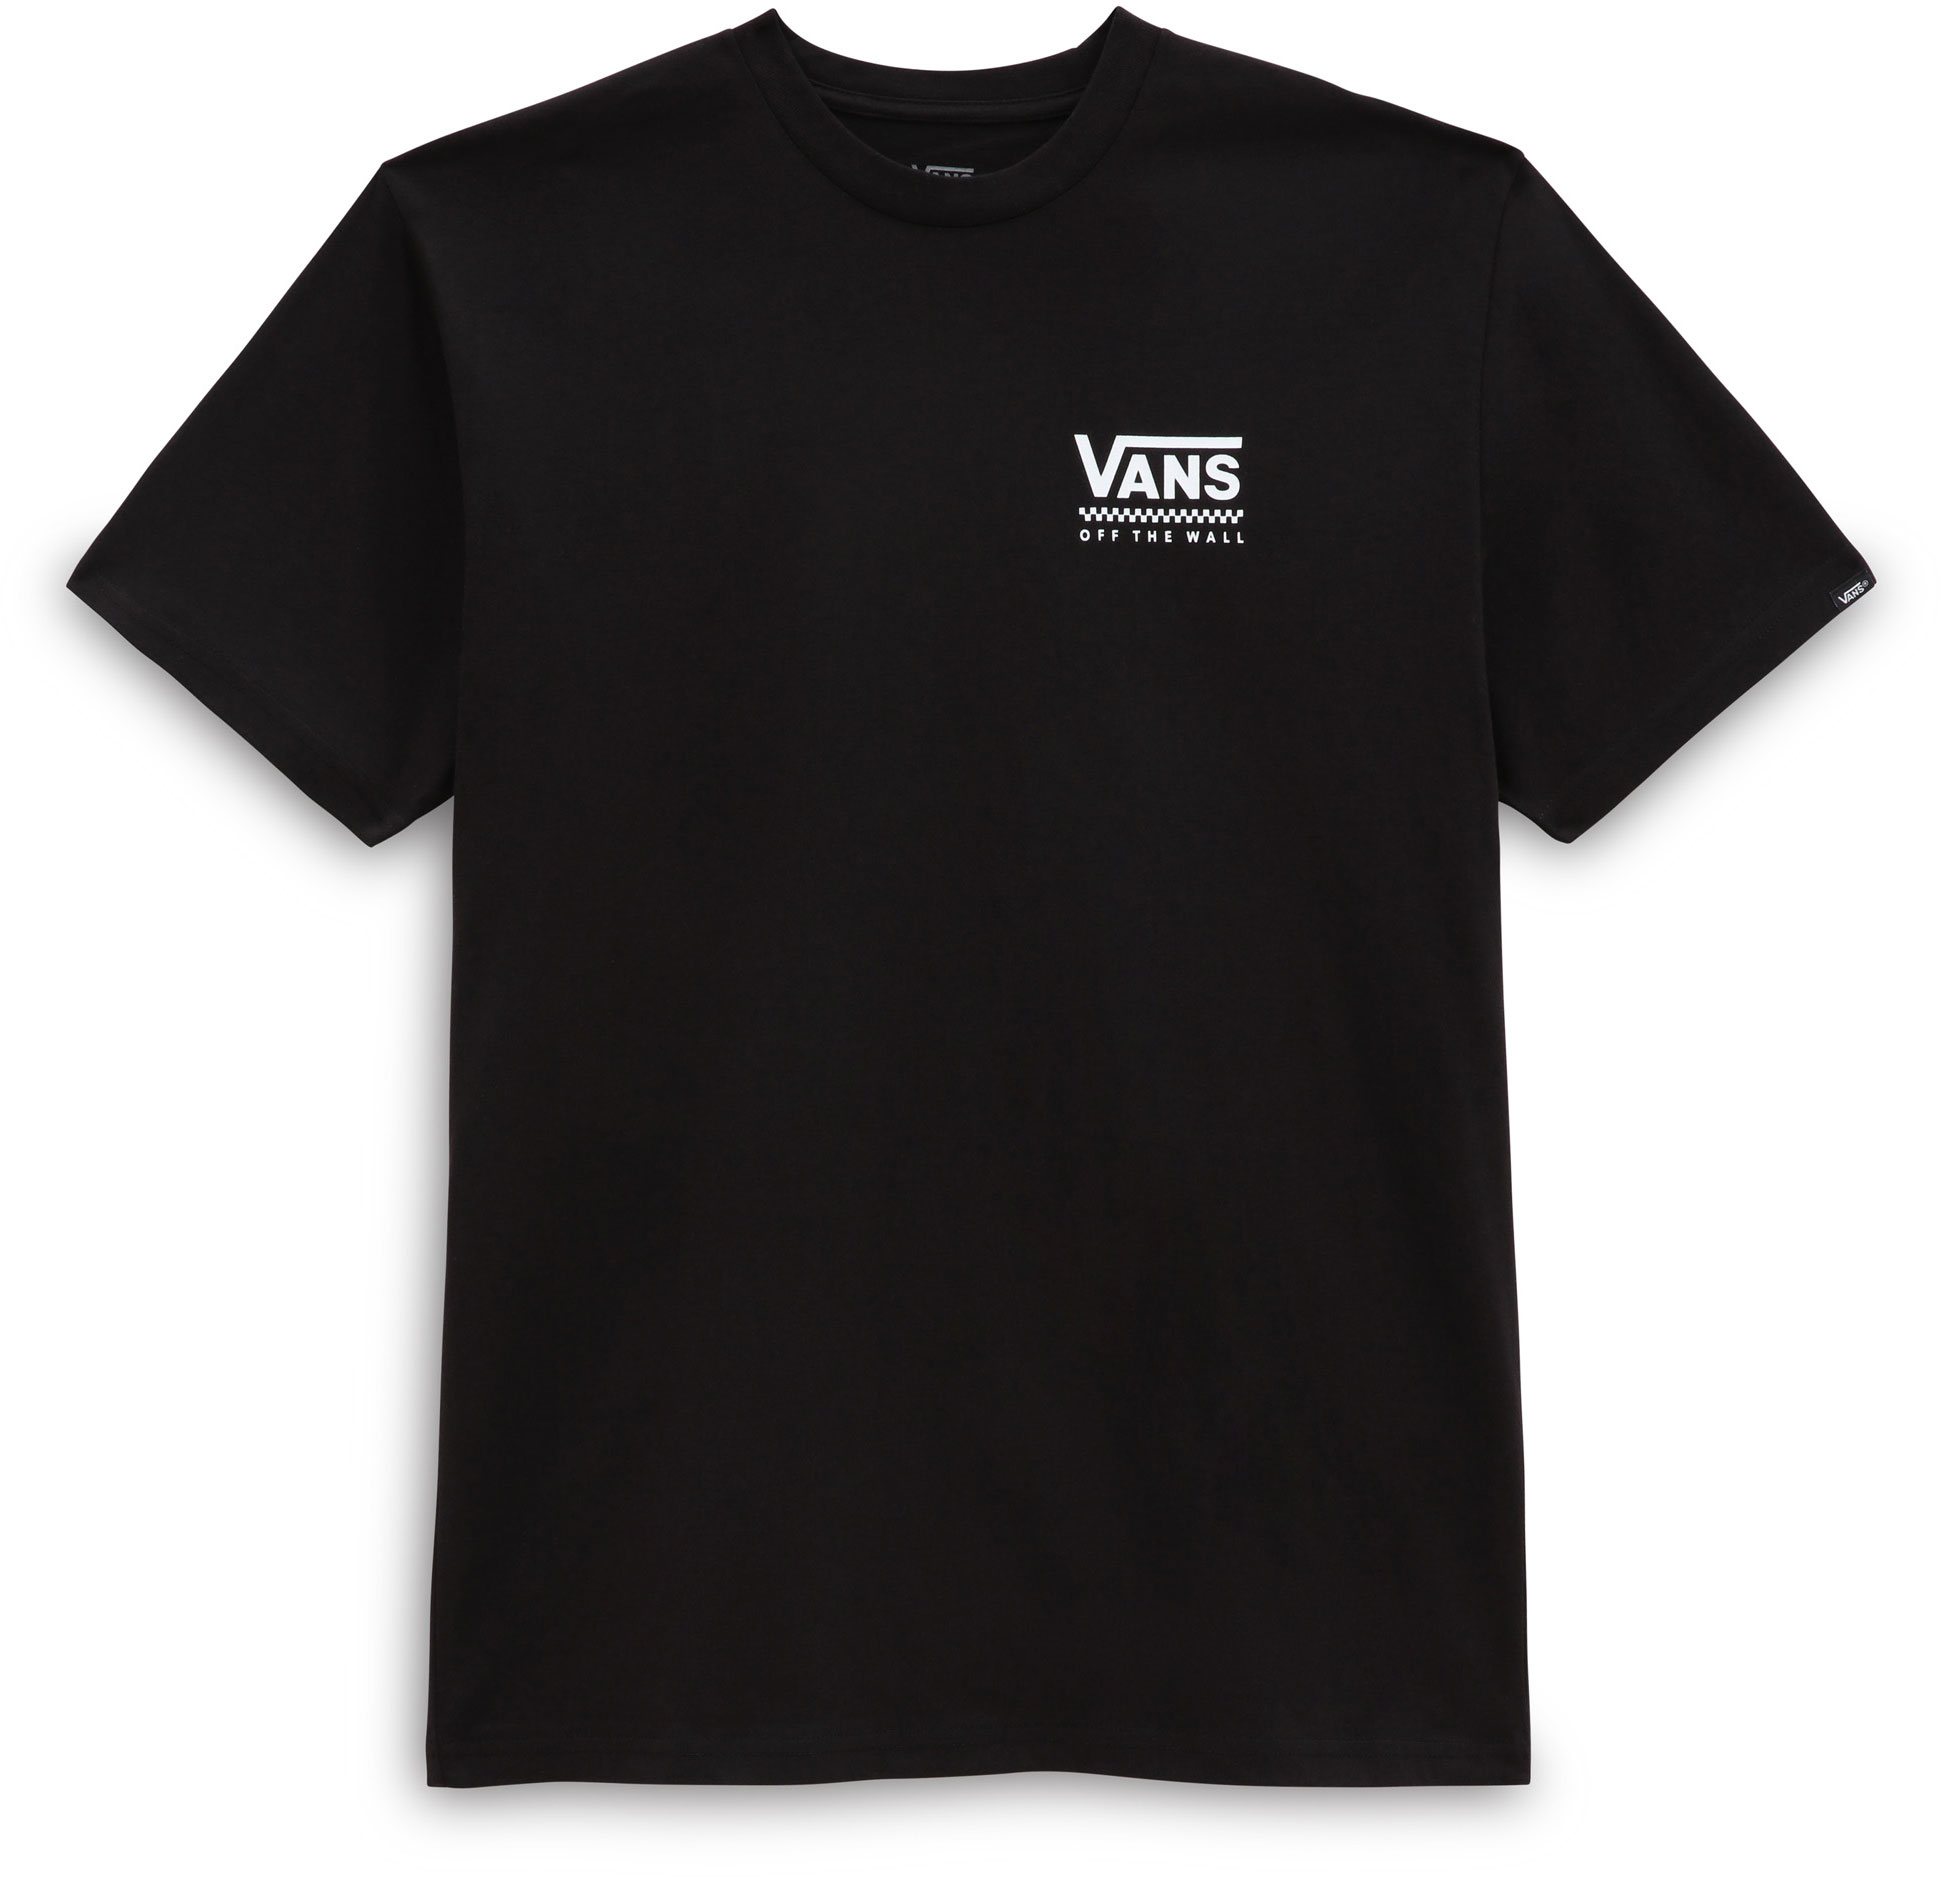 Nowa koszulka Vans Orbiter Black, rozmiar M